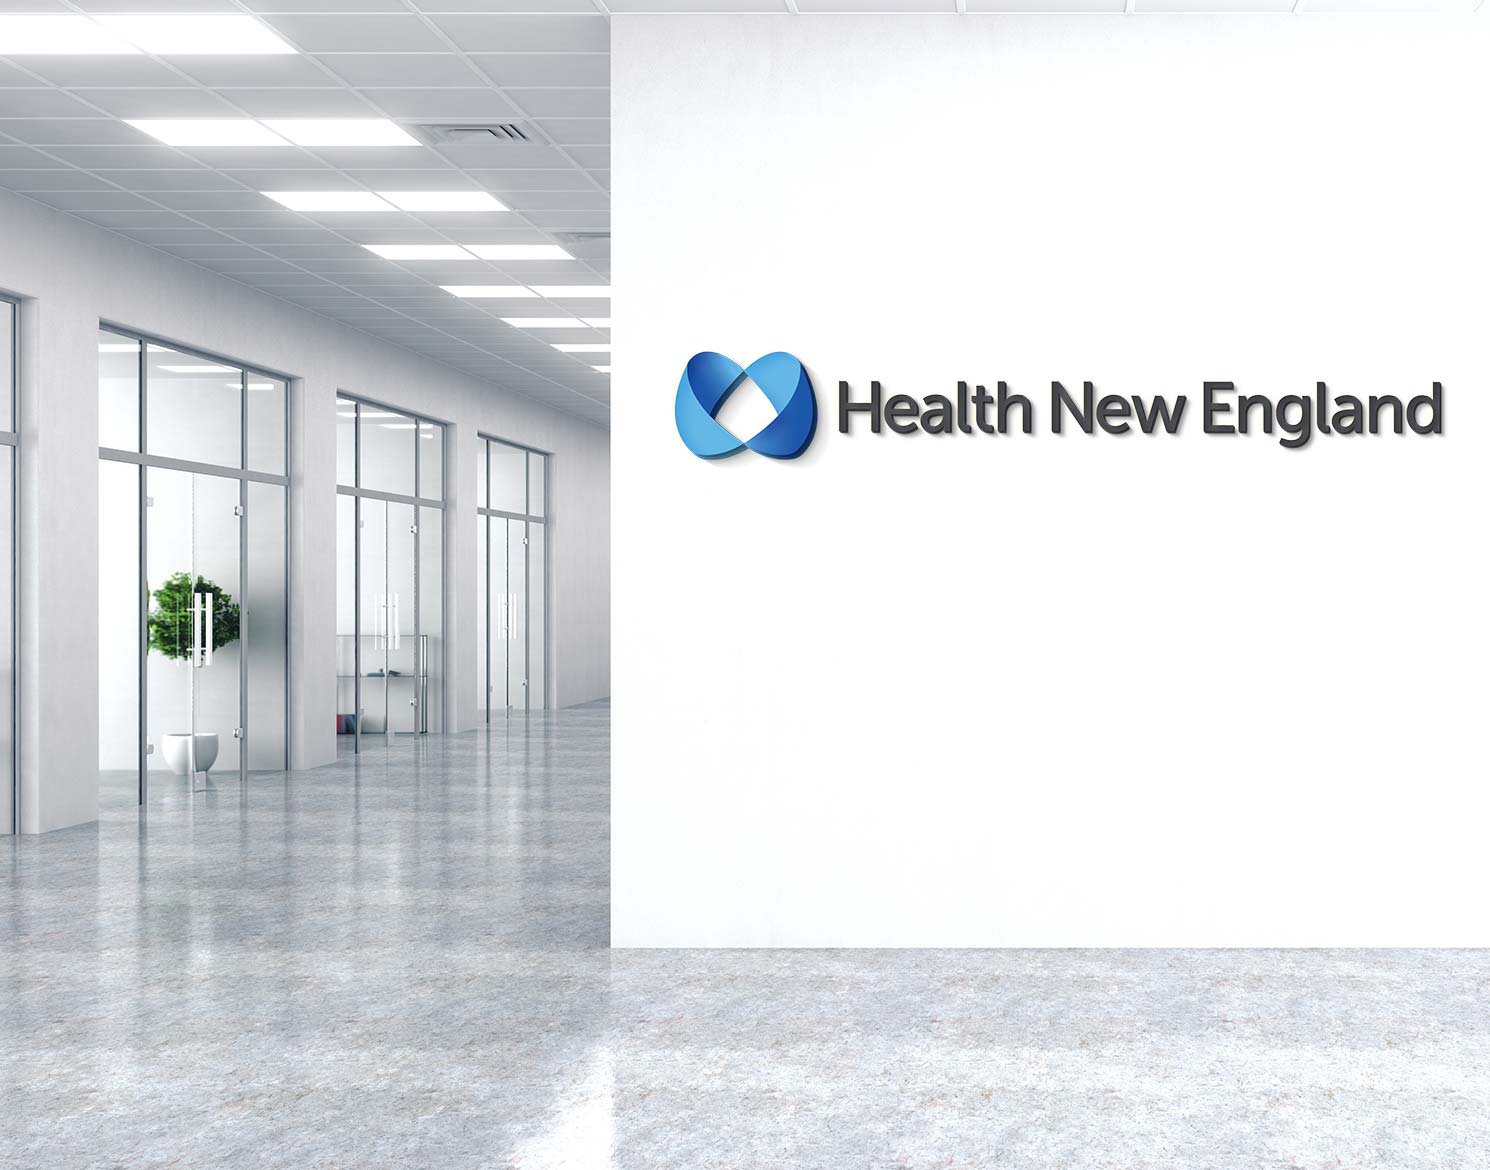 Health New England logo shown as a dimensional wall sign